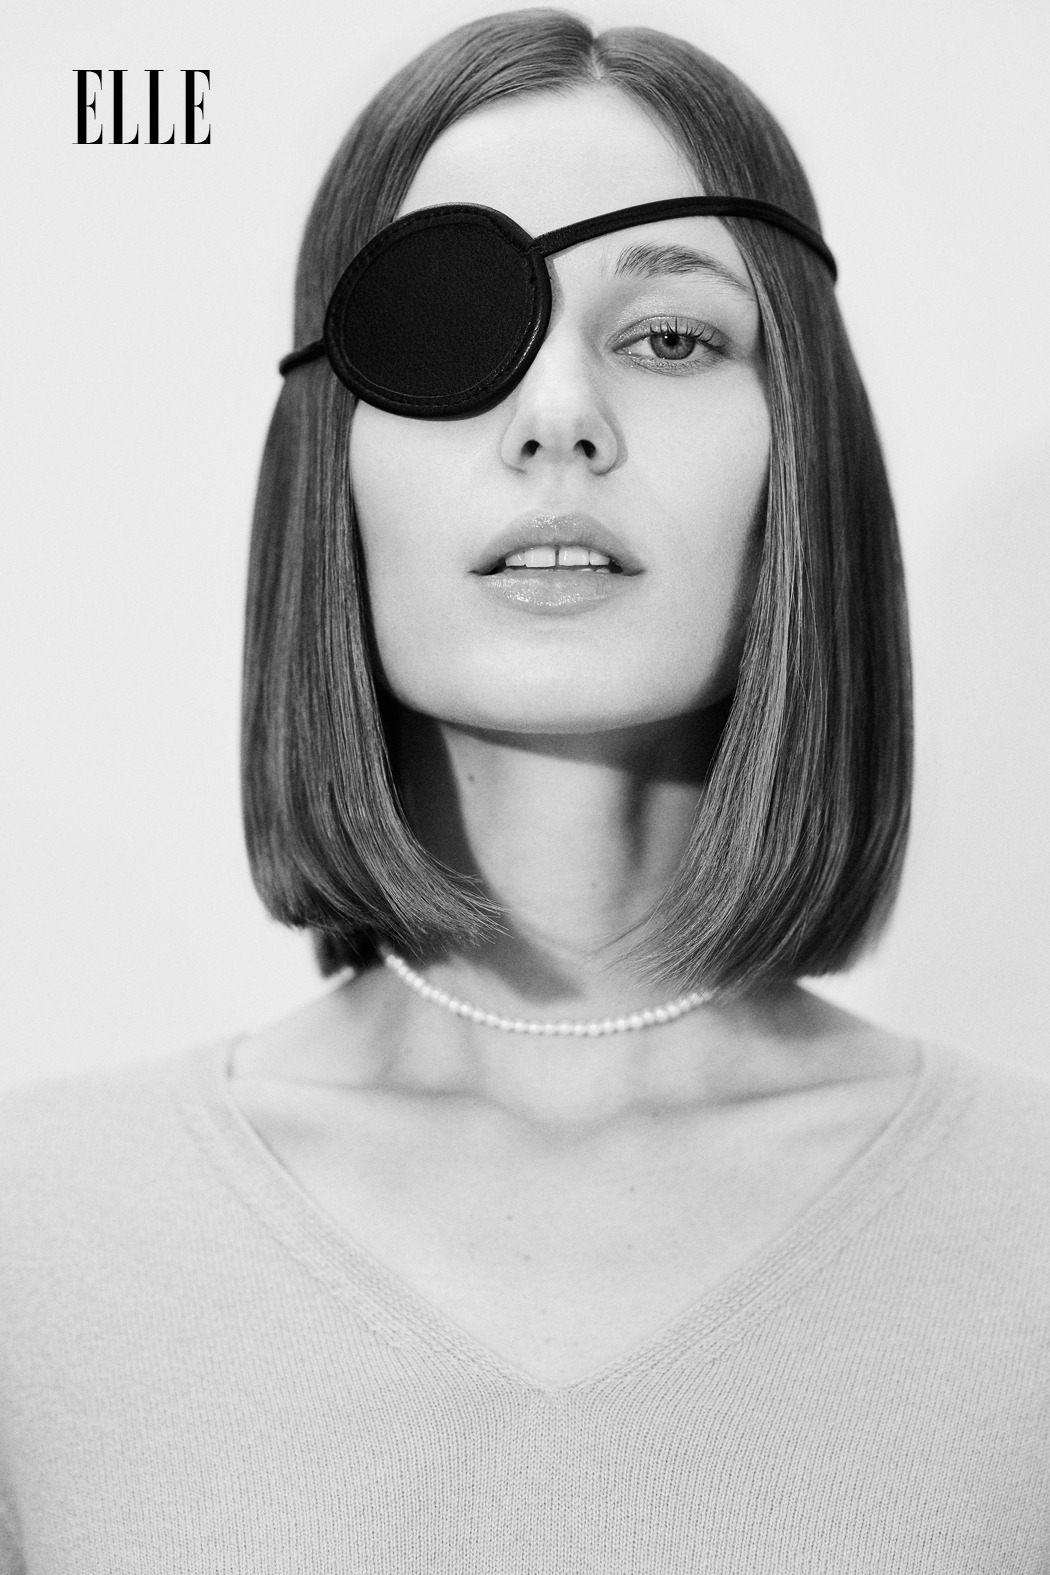 Editorial for Elle Romania / 2020
Photography / Christian Tudose
Styling / Maurice Munteanu
Model / Iulia Stroe
Makeup / Ioana Covali
Hair / Cosmin Benchea